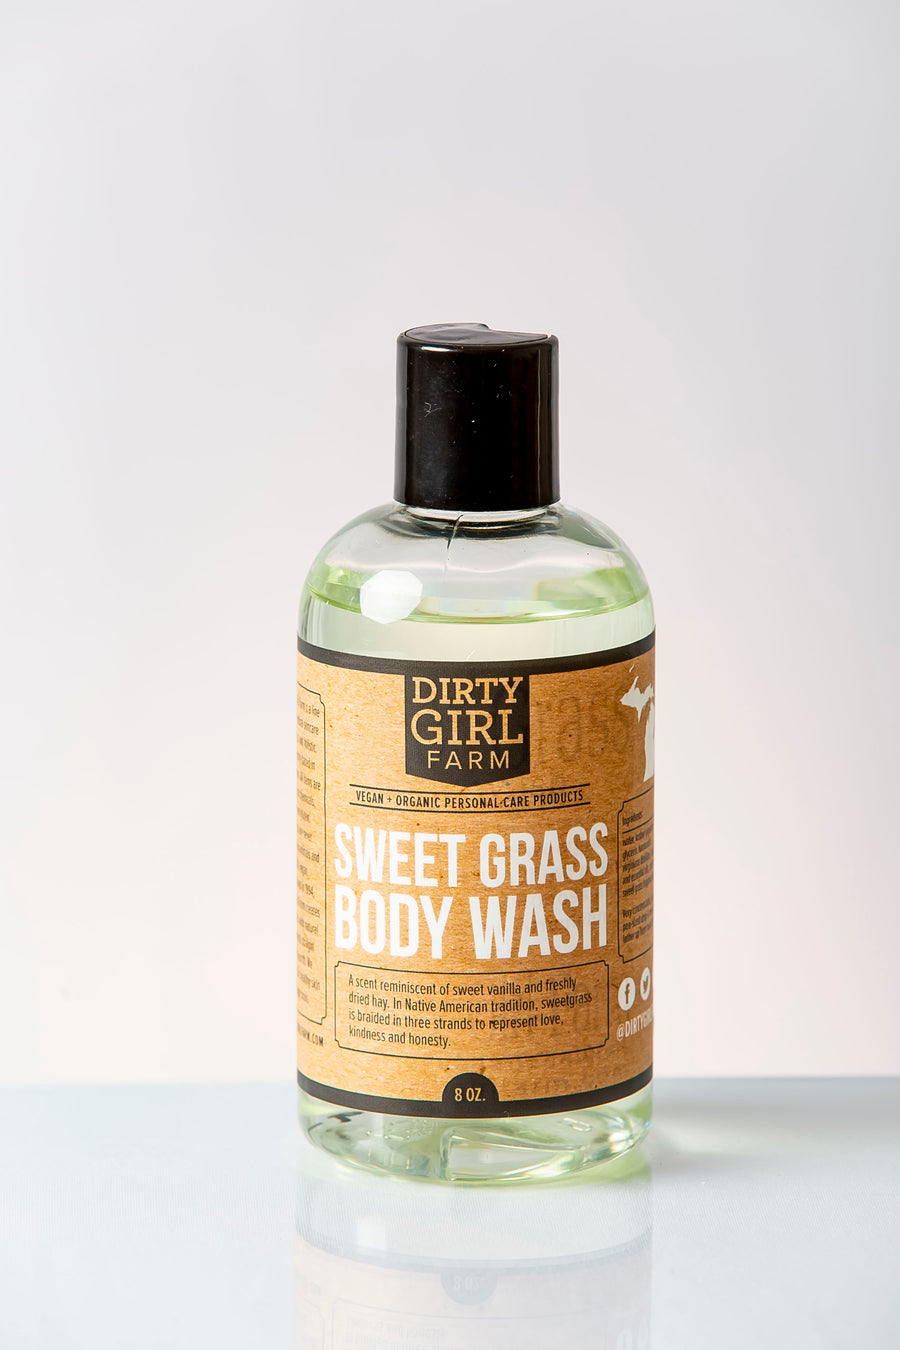 Dirty Girl Farm Sweet Grass Body Wash